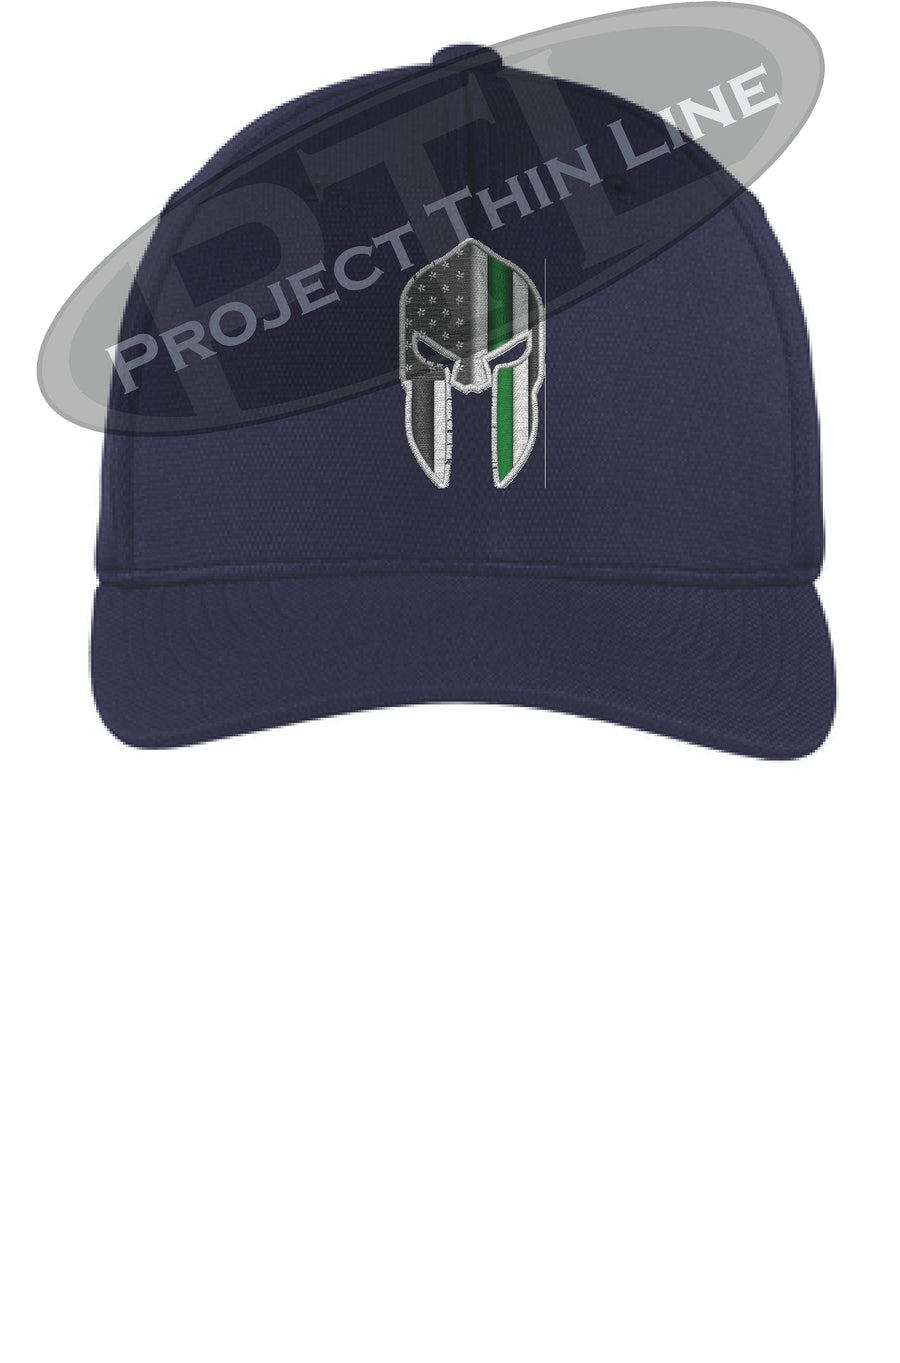 Black Flex Fit Hat Spartan Helmet with Thin GREEN Line 